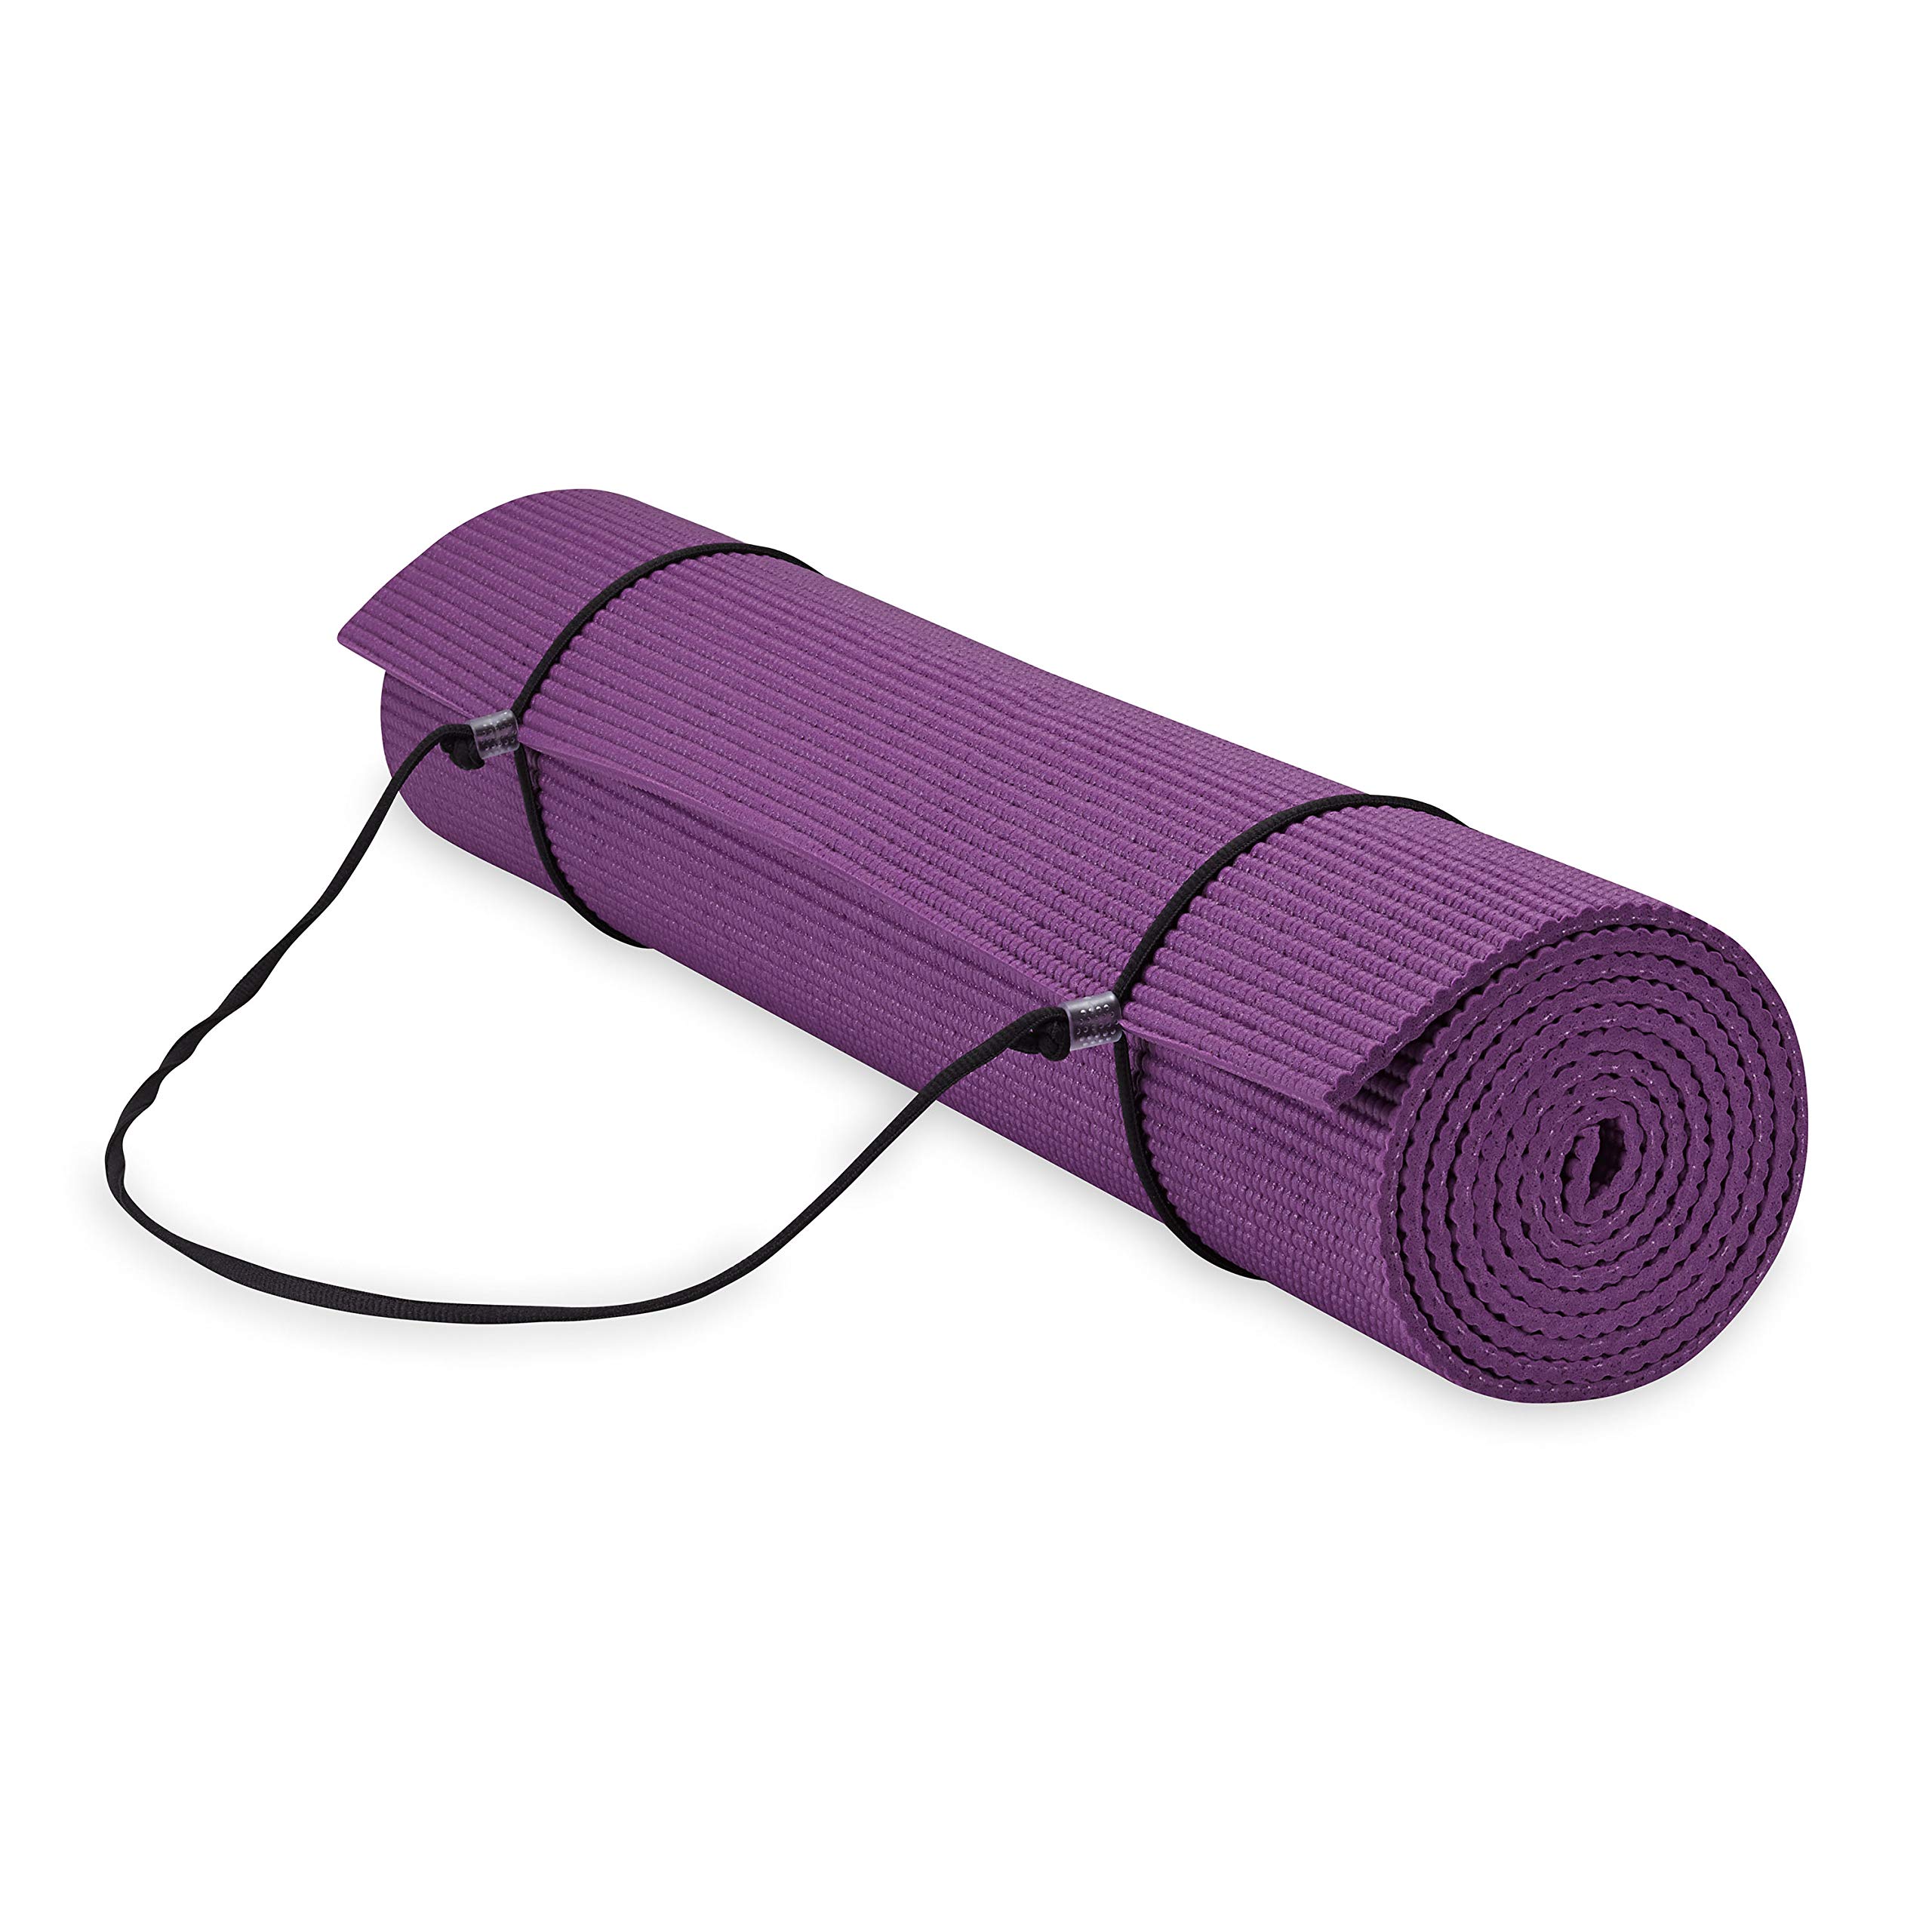 Gaiam Essentials Premium Yogamatte mit Yogamatte, Tragetuch, lila, 183 cm L x 61 cm B x 0,6 cm dick